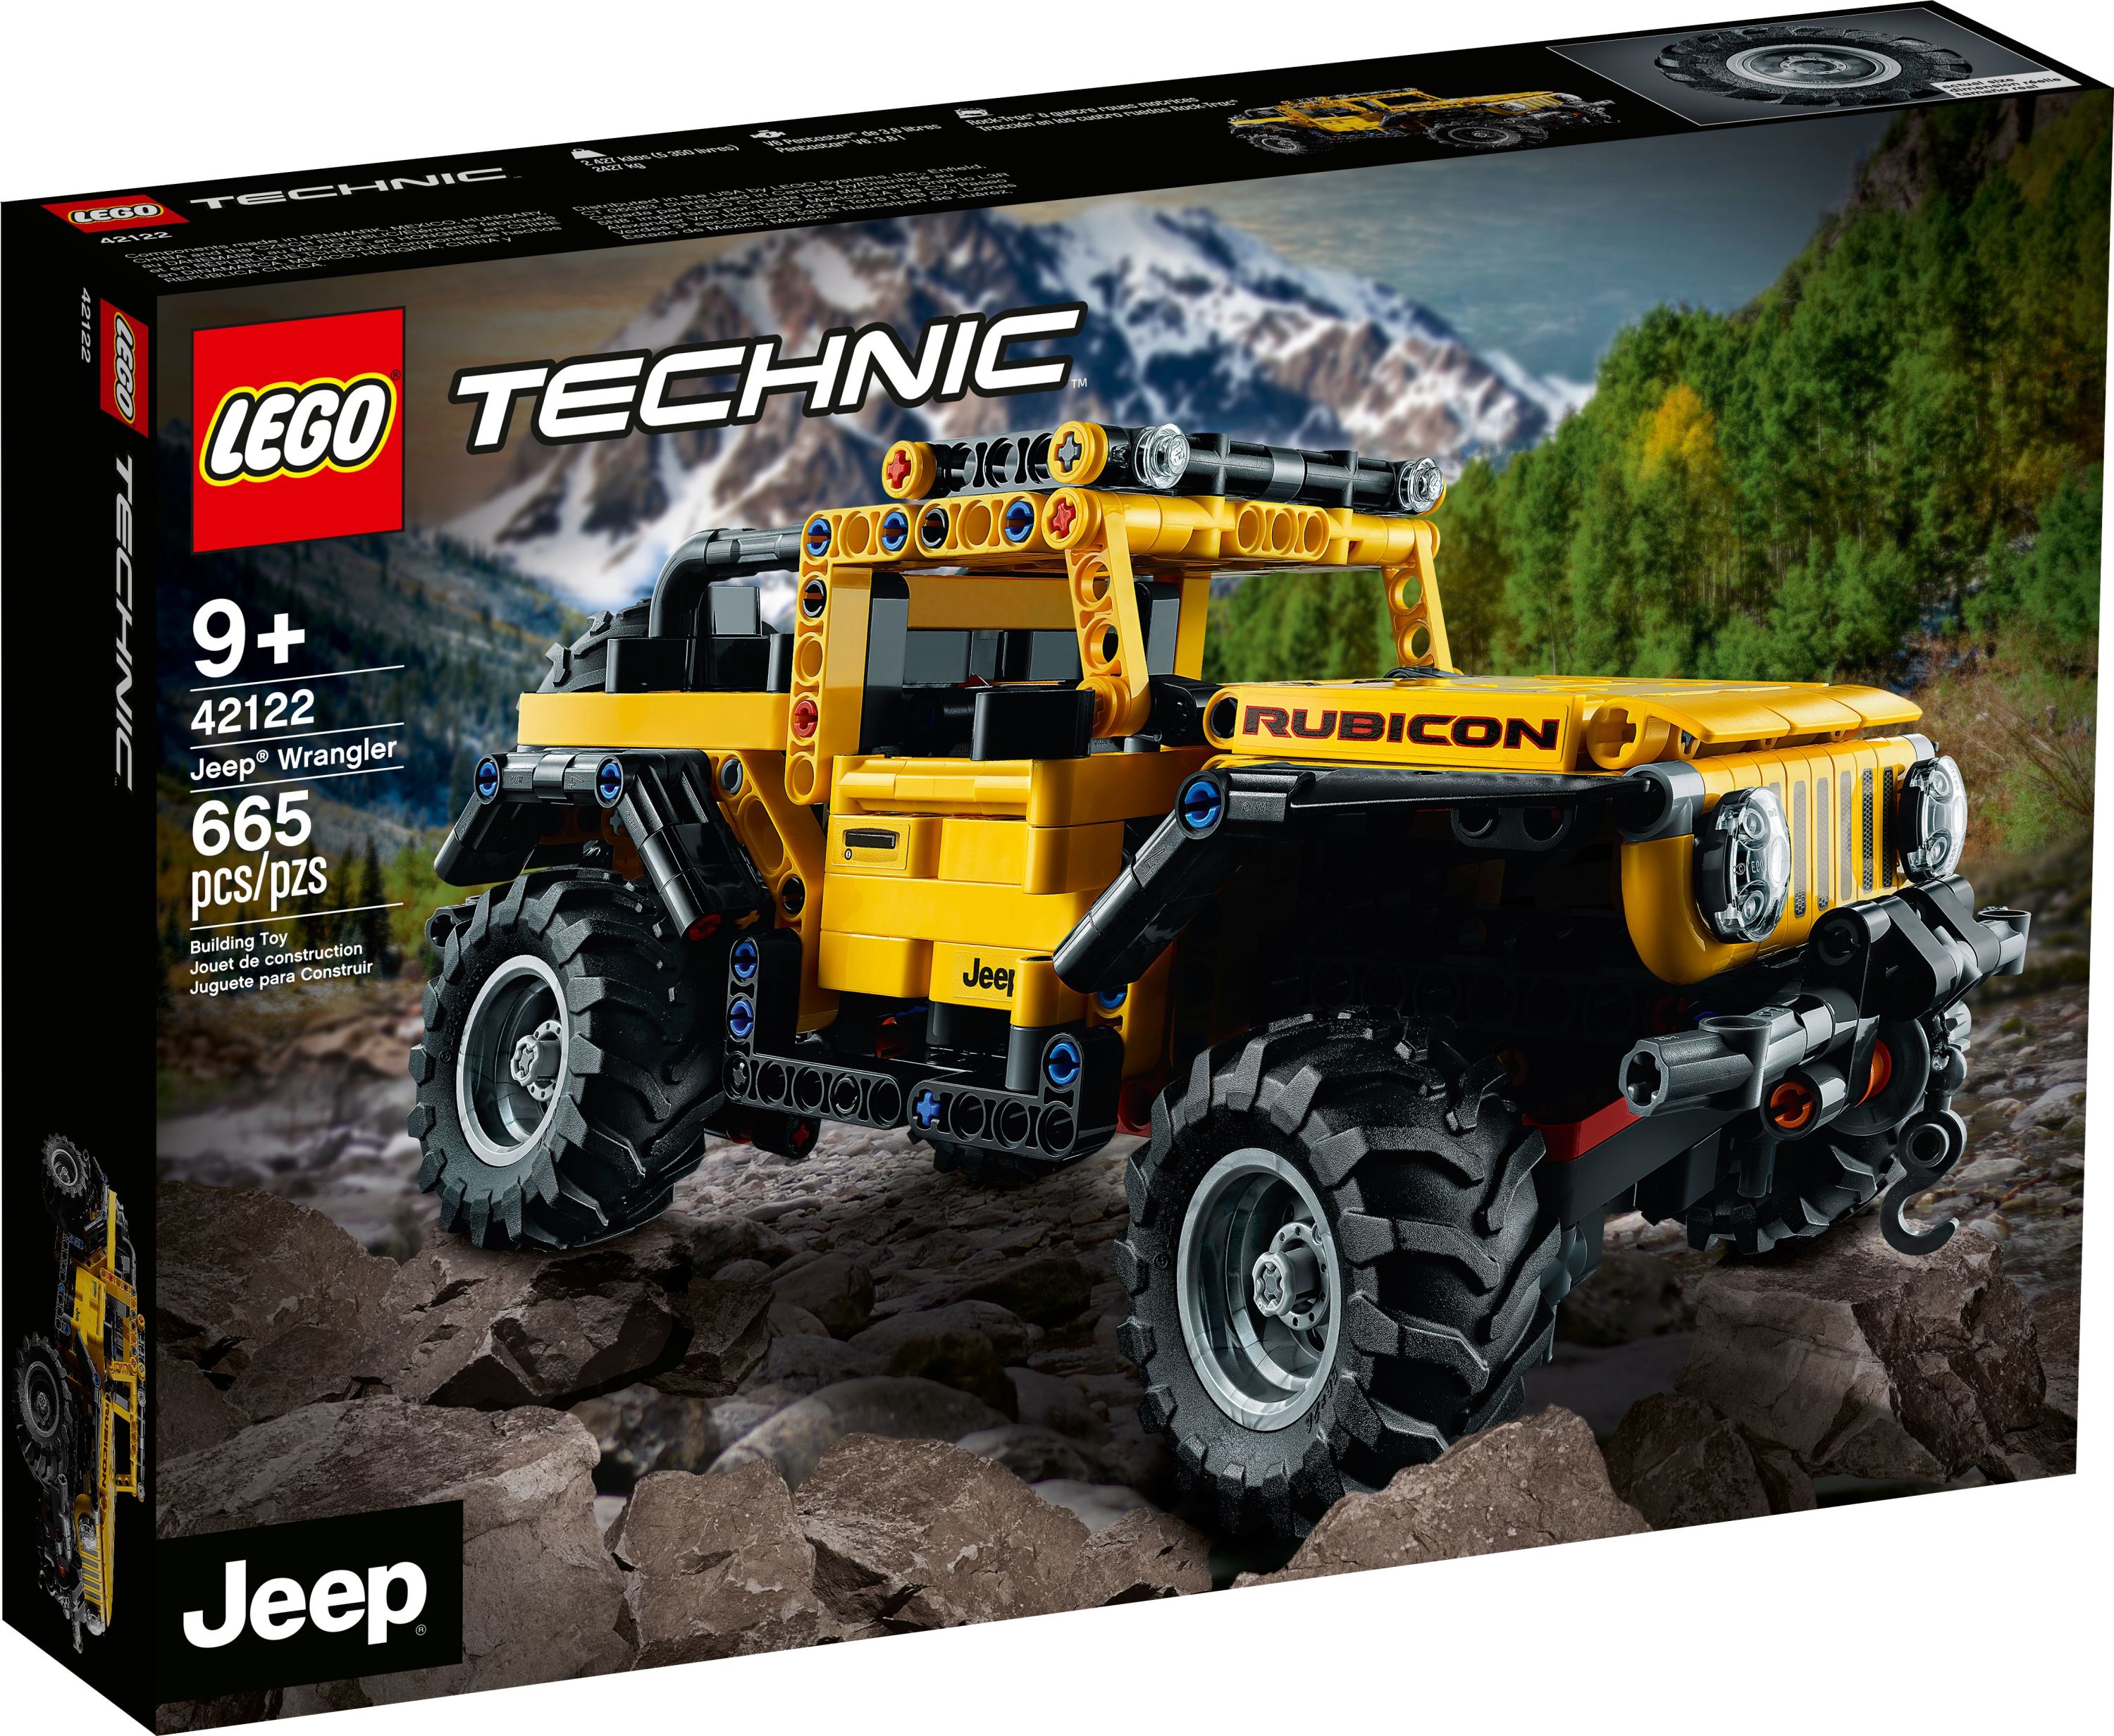 LEGO Technic Jeep® Wrangler 42122 - image 4 of 6